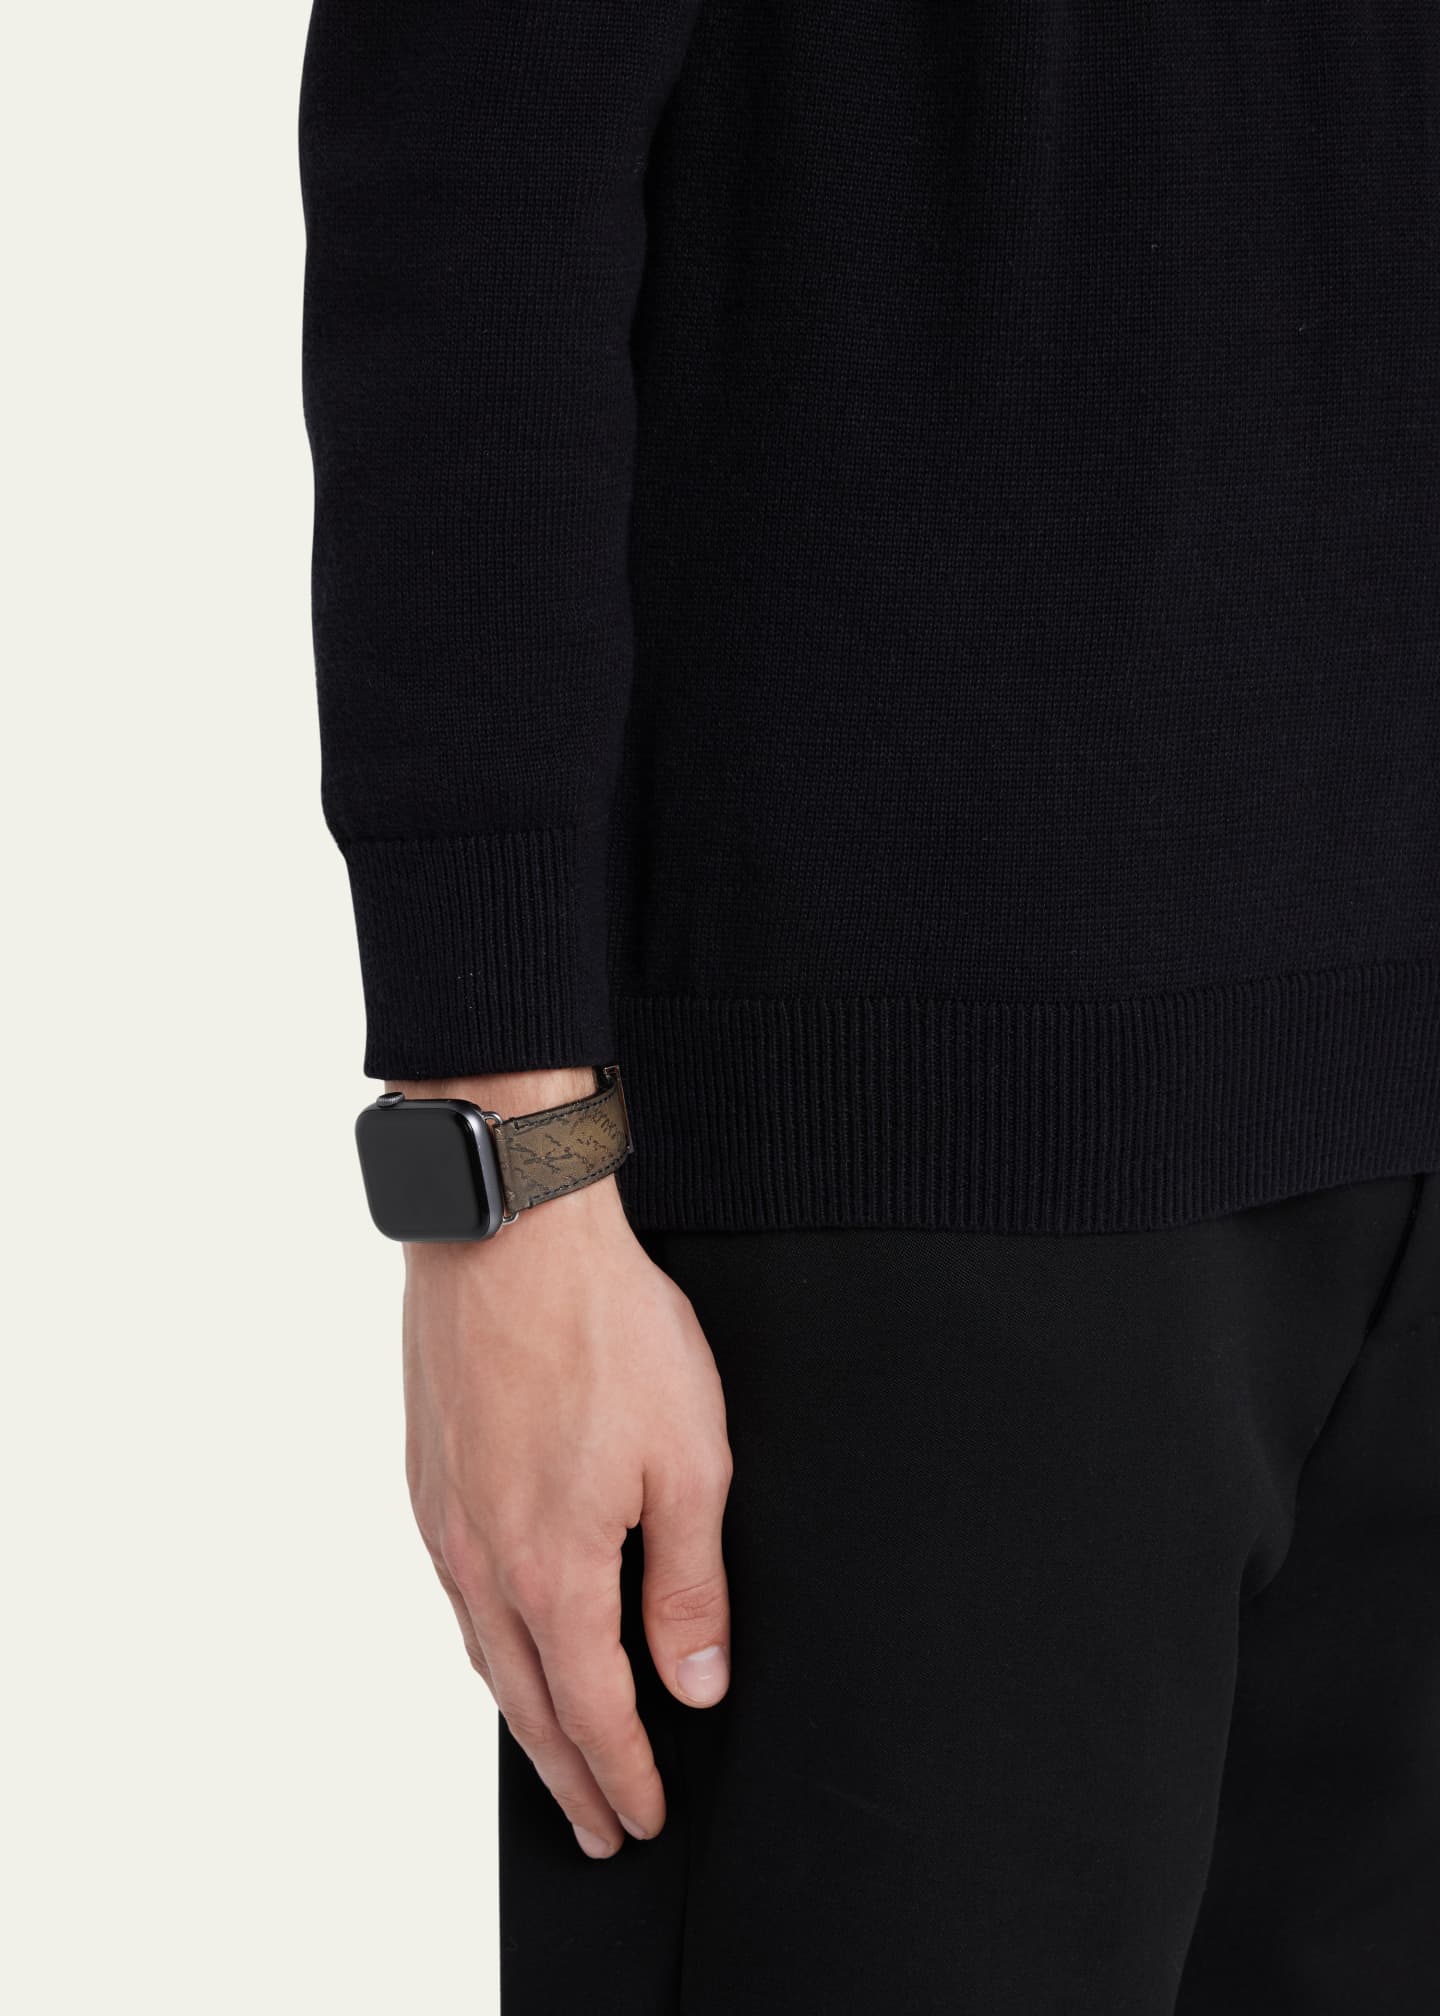 Berluti Men's Scritto Leather Apple Watch Strap, 44mm, Aveiro, Men's, Watches Watch Straps